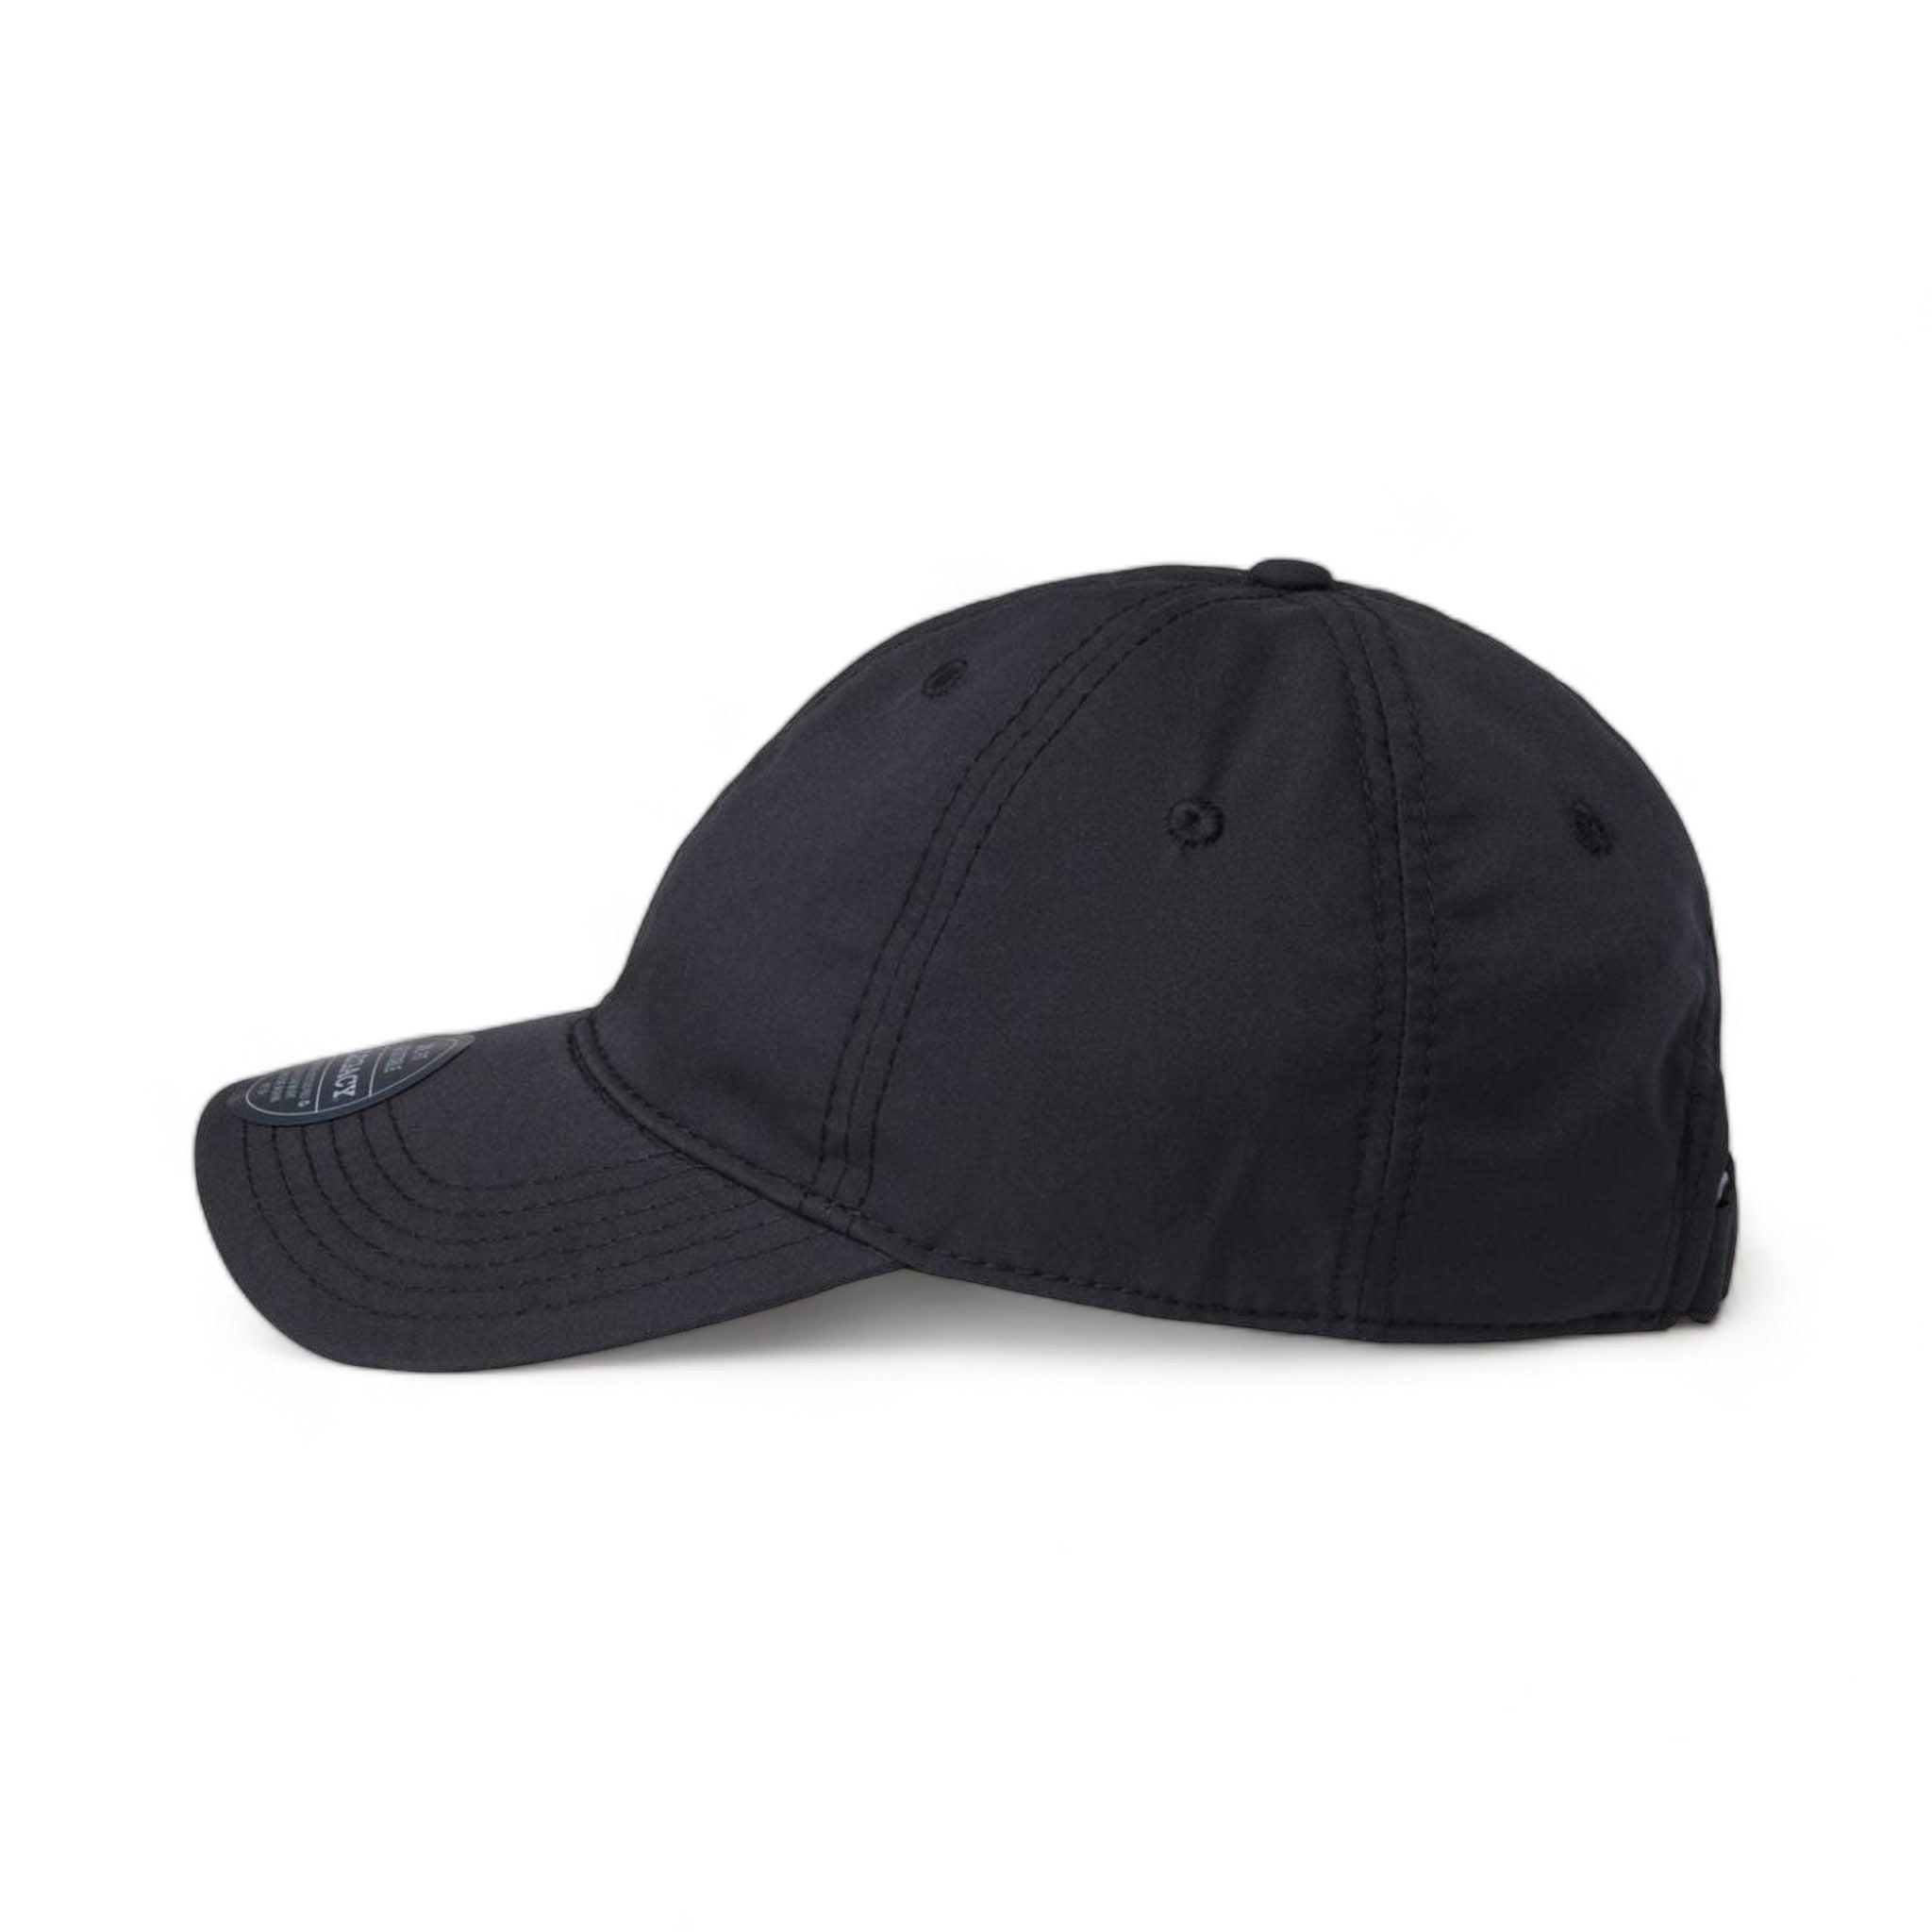 Side view of LEGACY CFA custom hat in black